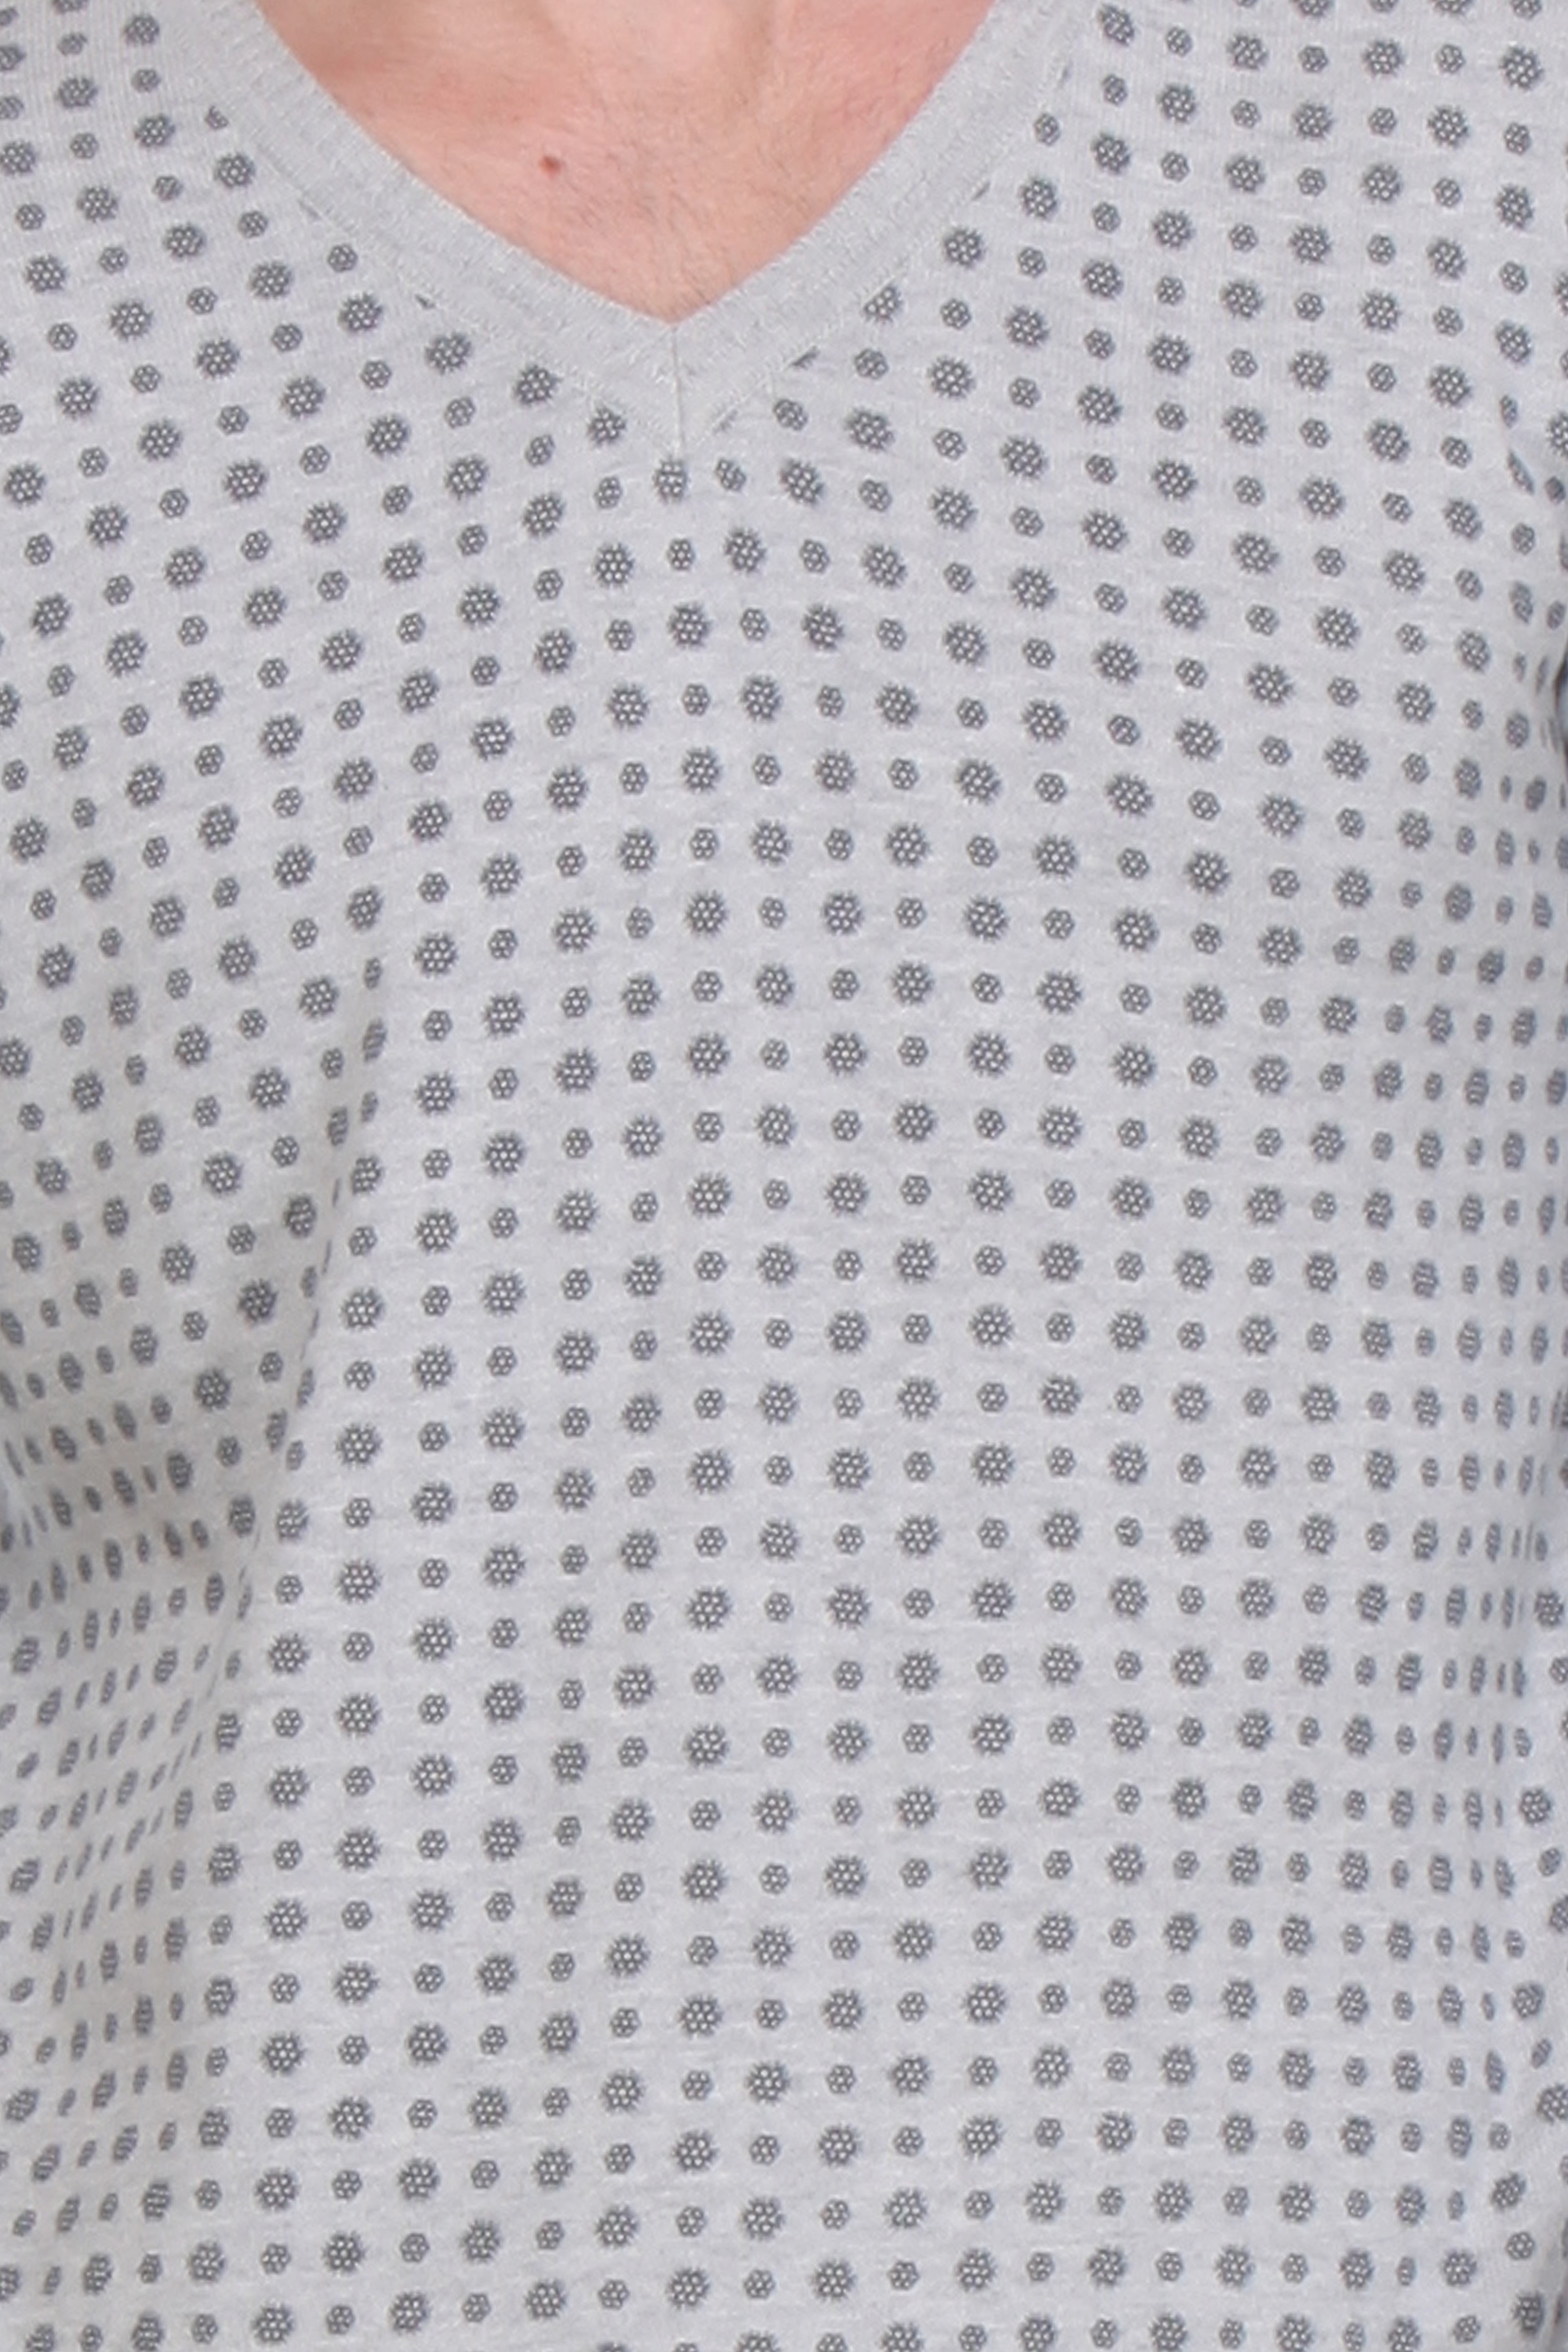 Crimsoune Club Men Grey Printed V-Neck Sweater